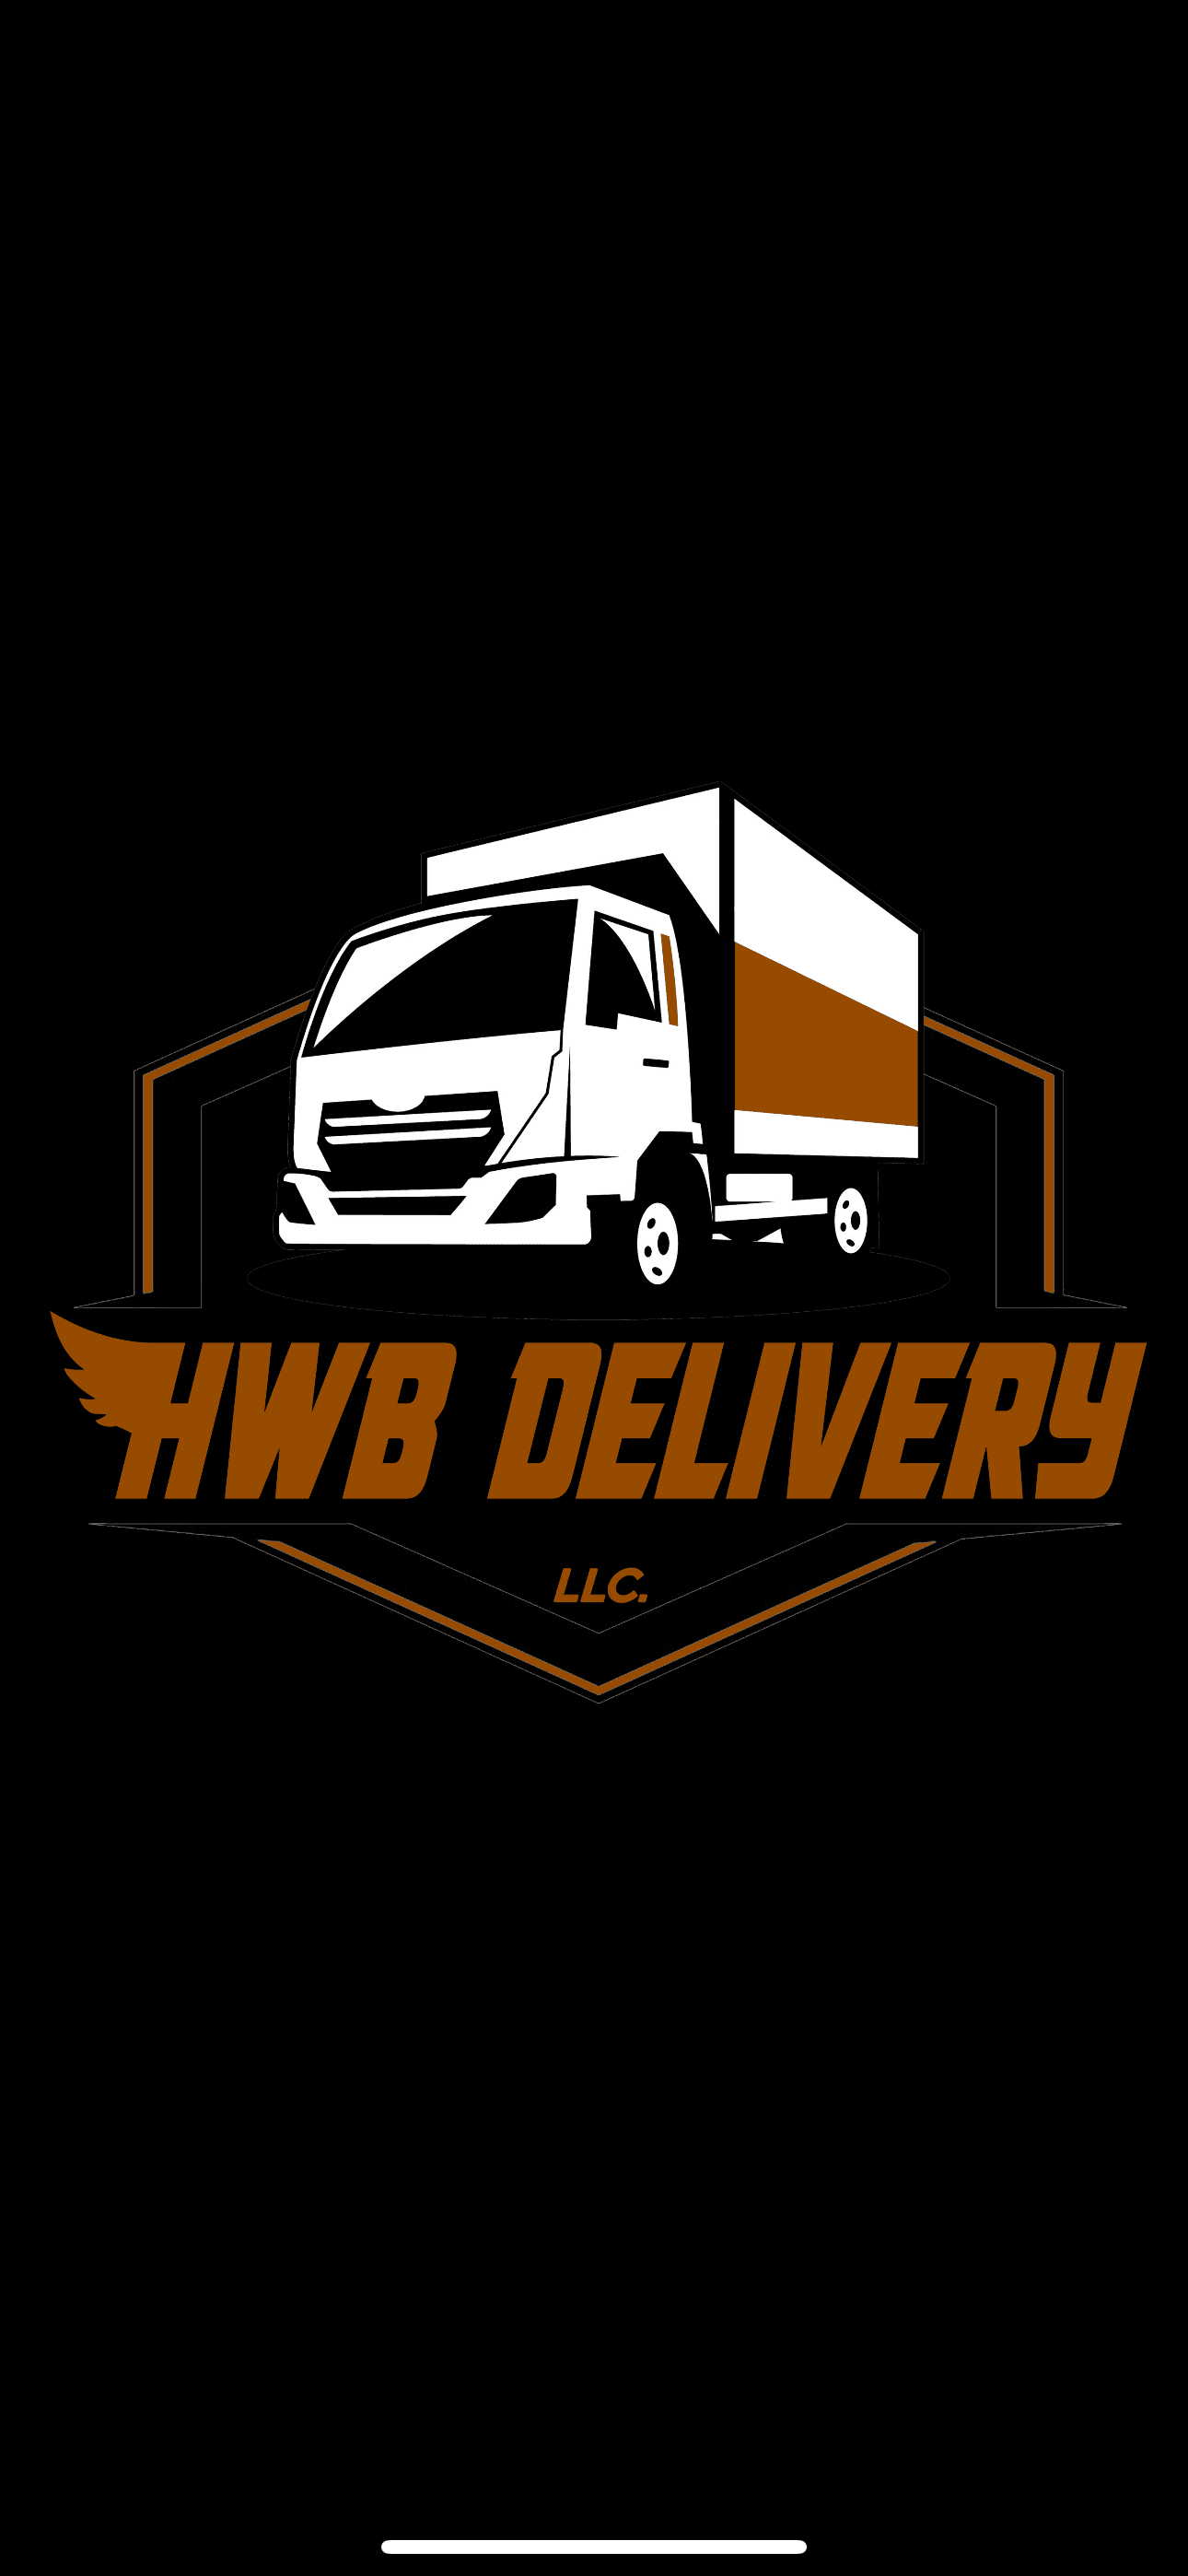 HWB Delivery Service LLC